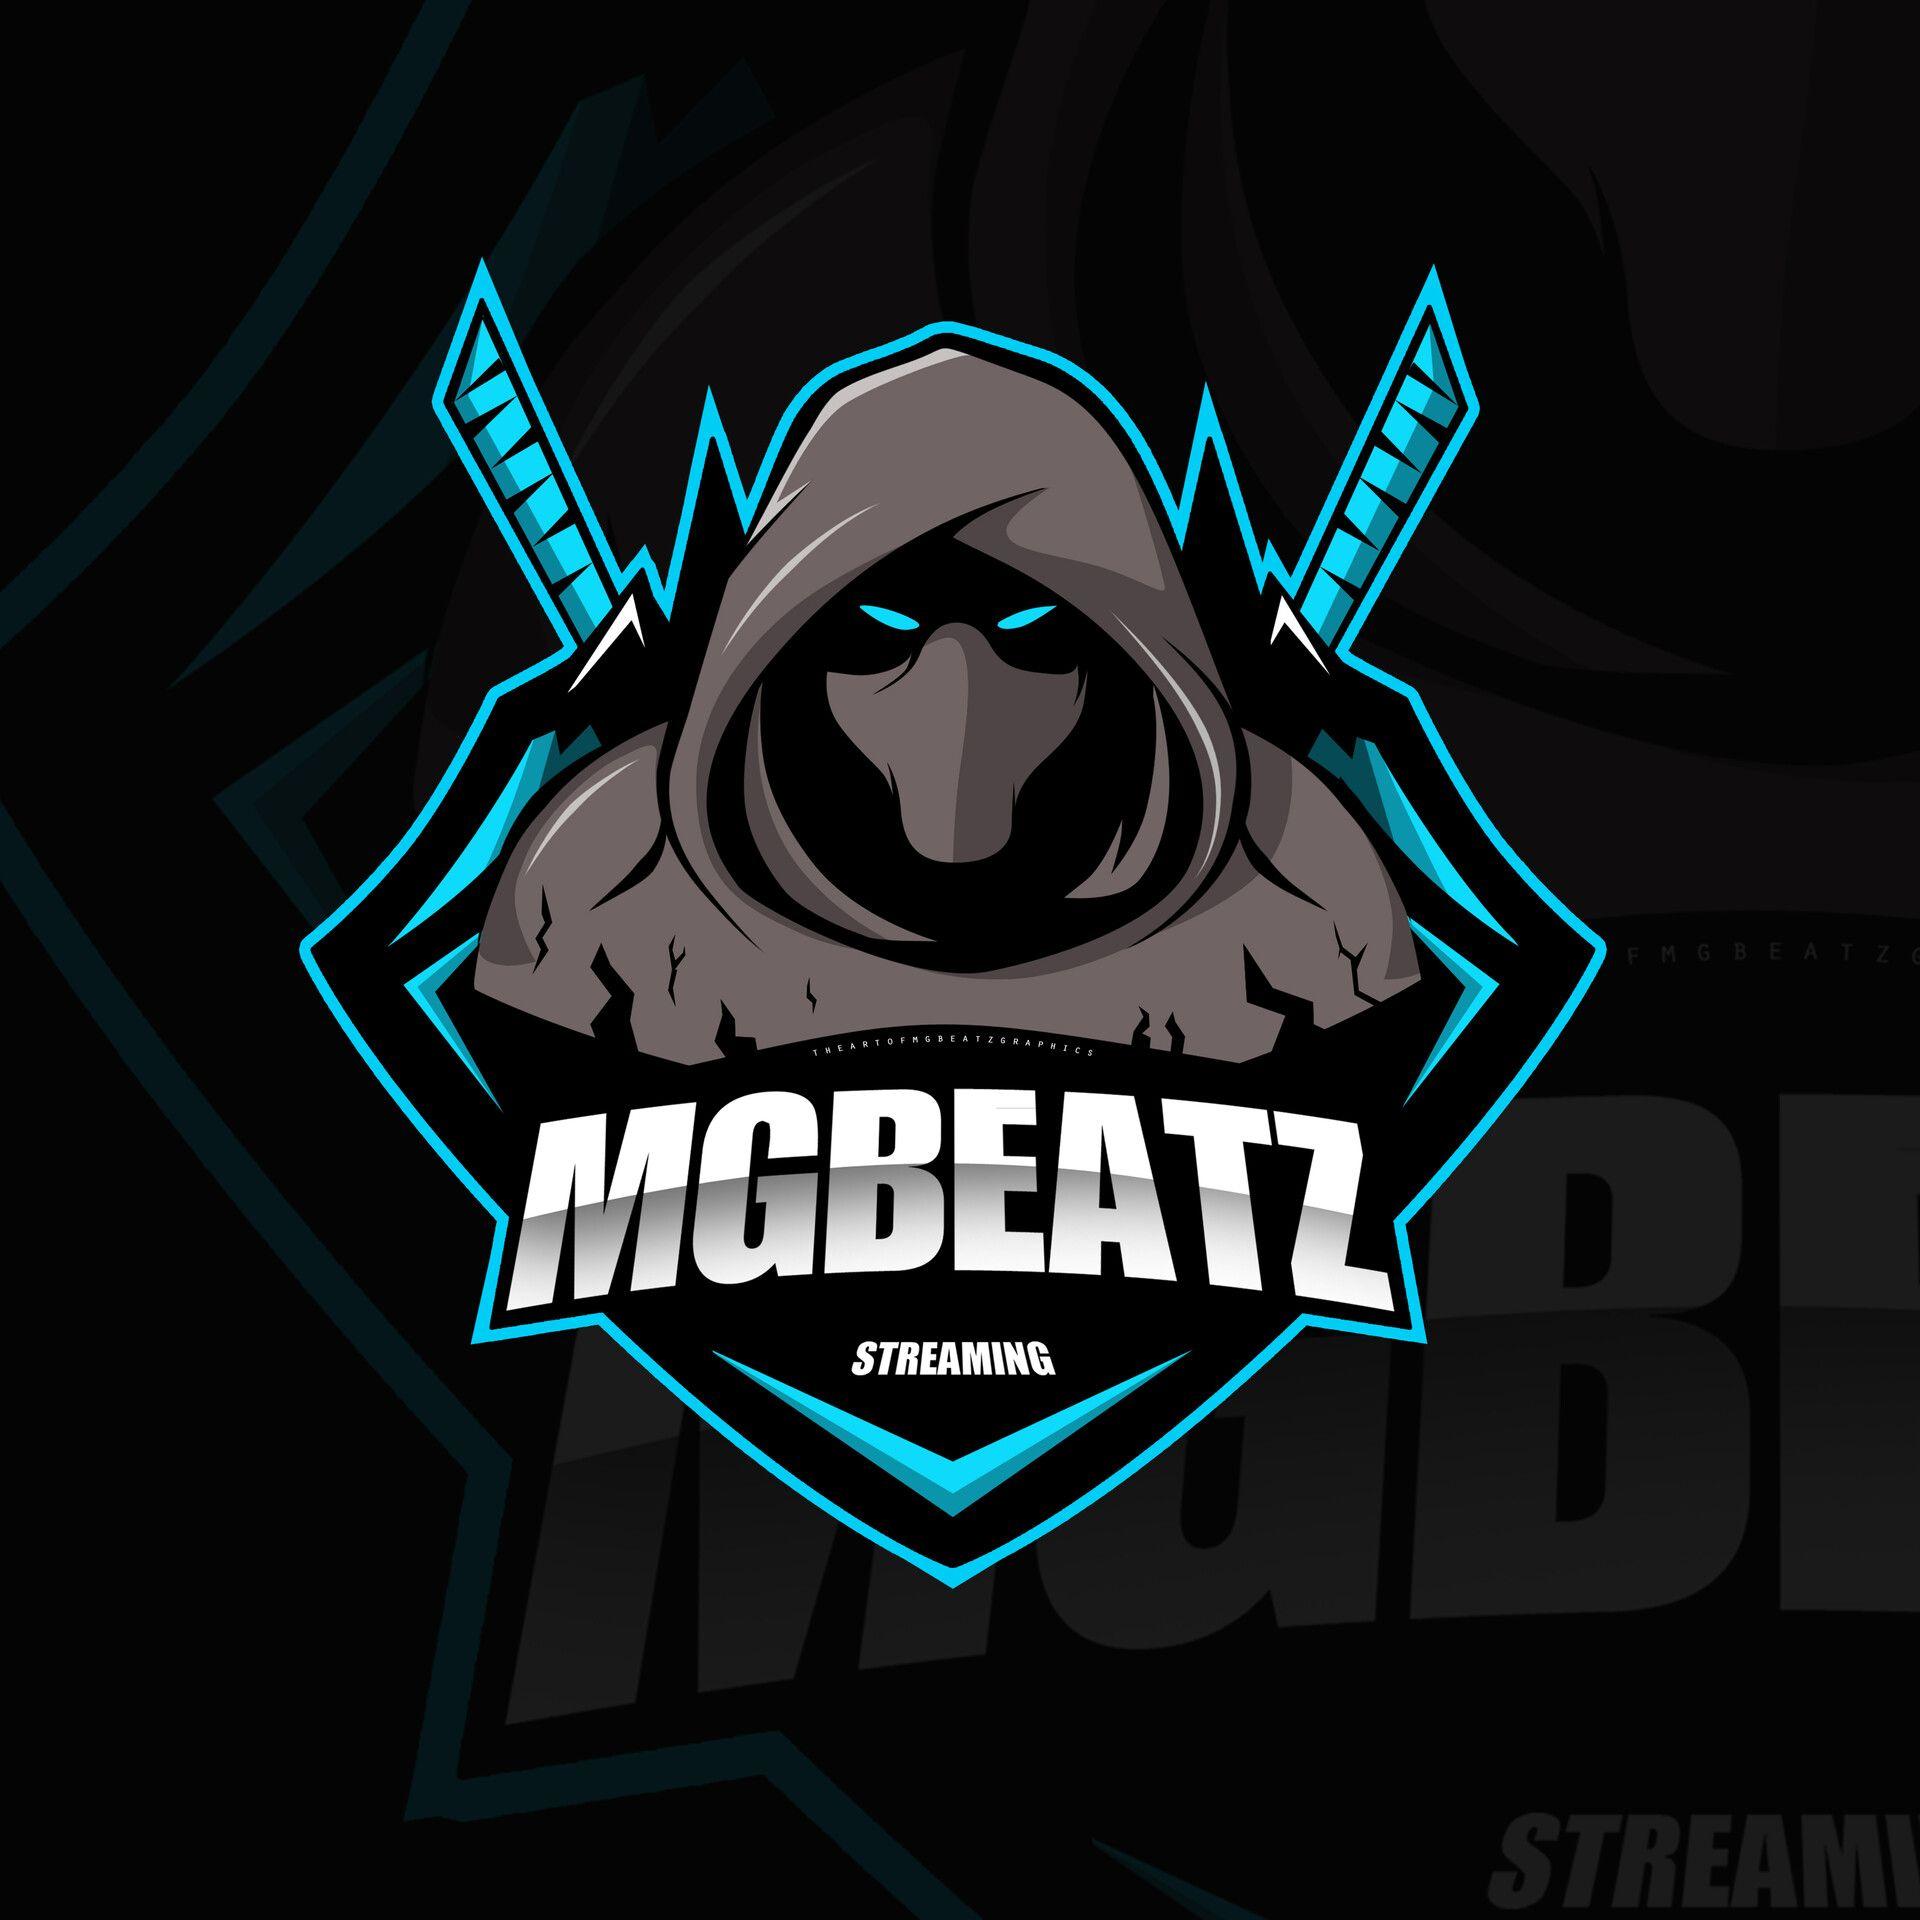 Beatz Logo - MG BEATZ LOGO COLLECTION FOR STREAMING AND GRAPHICS